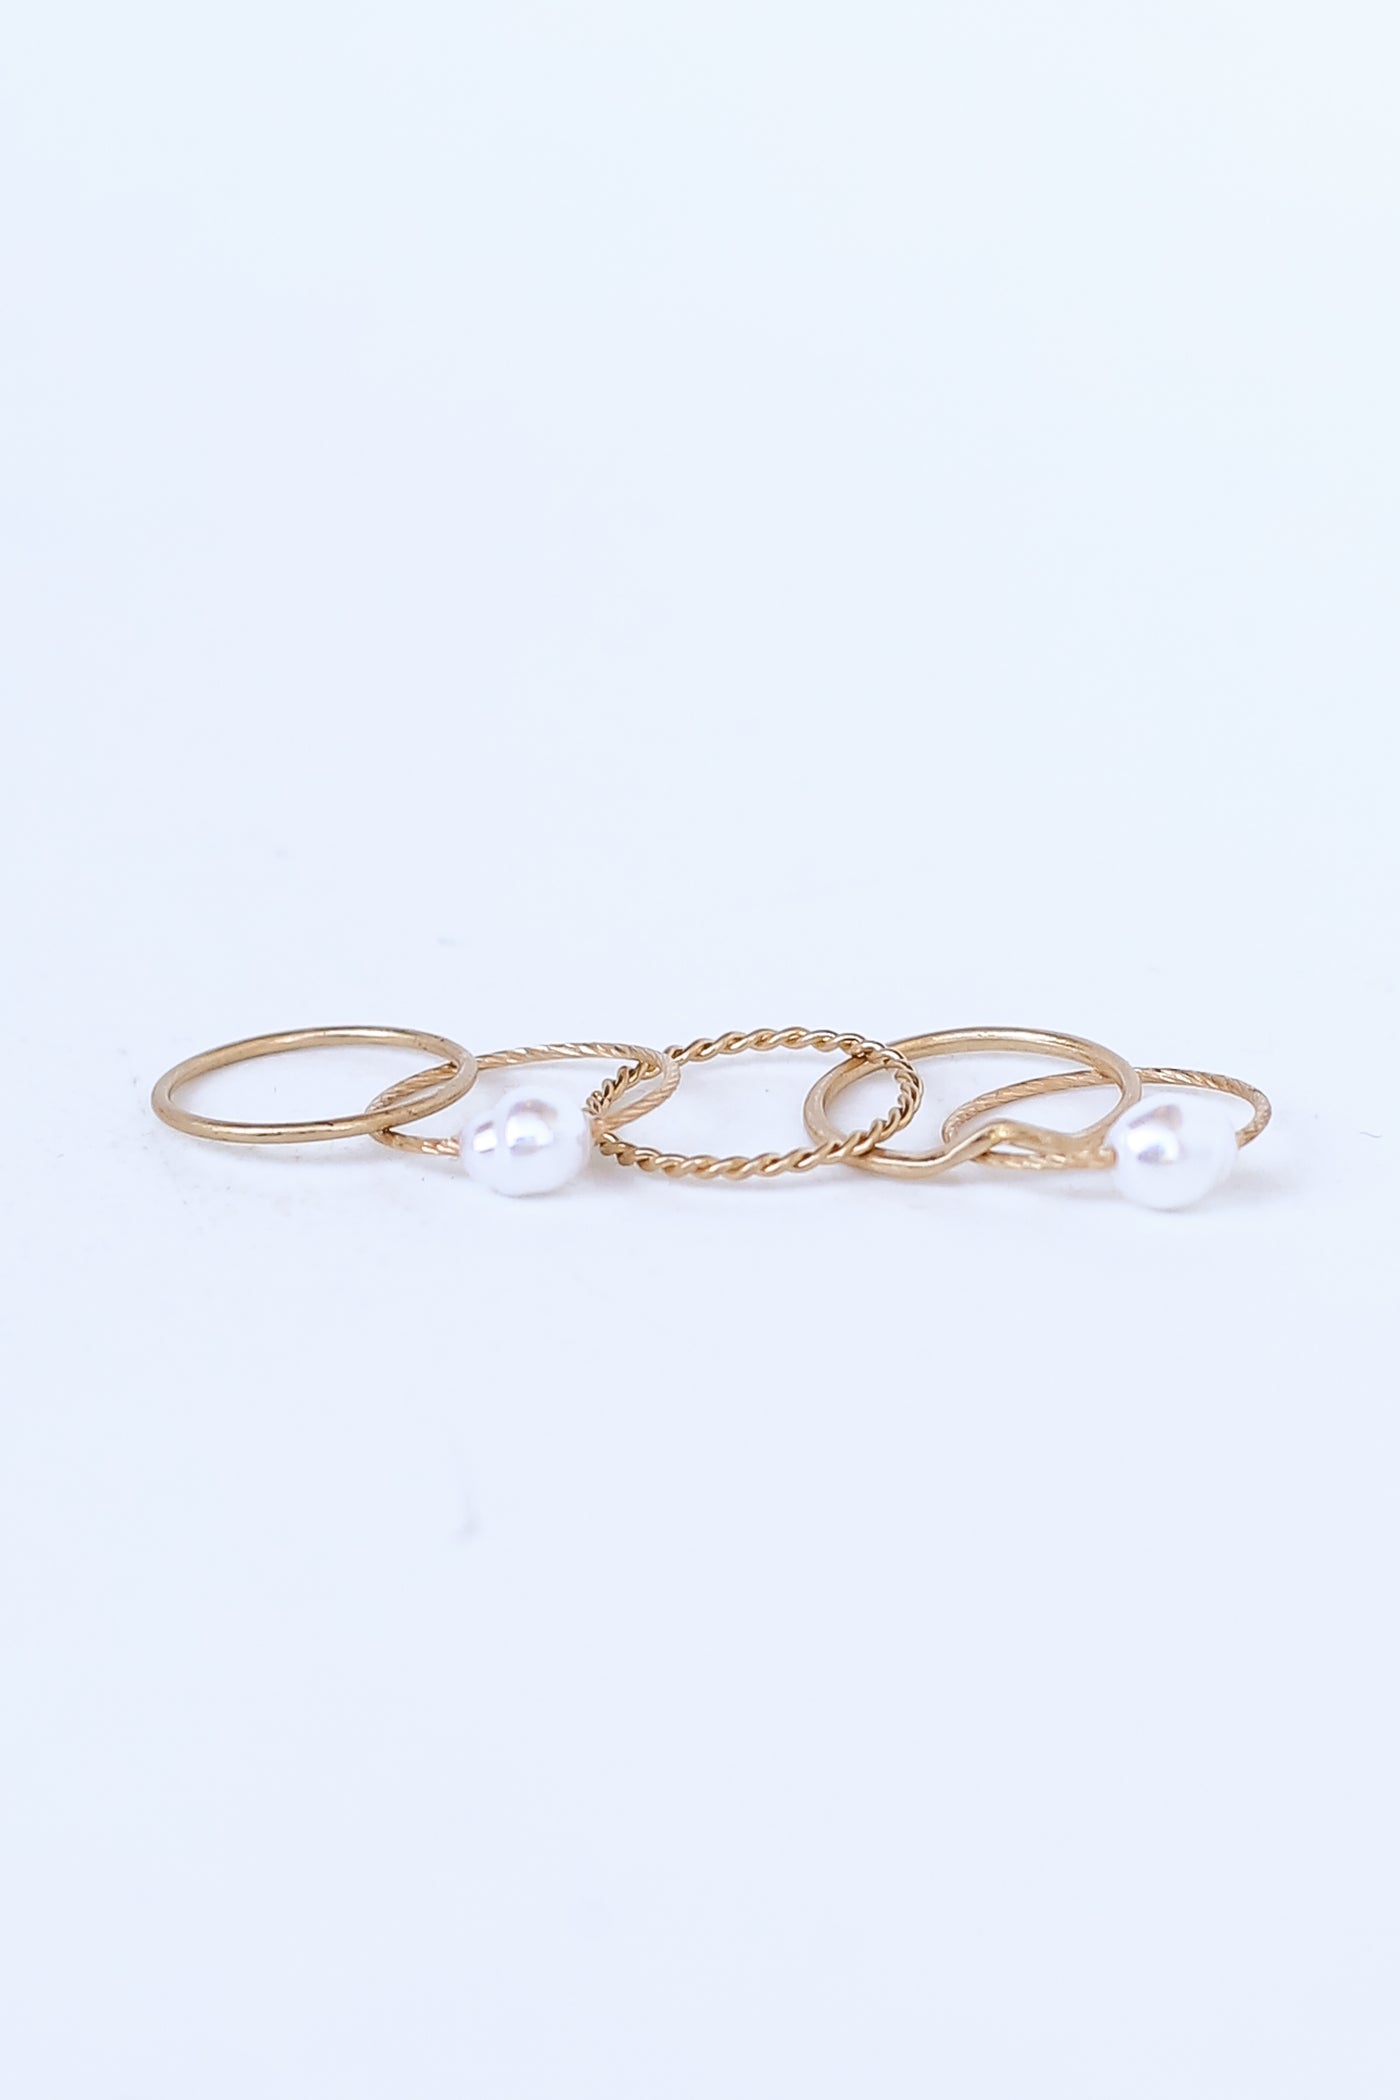 Gold Pearl Ring Set flat lay